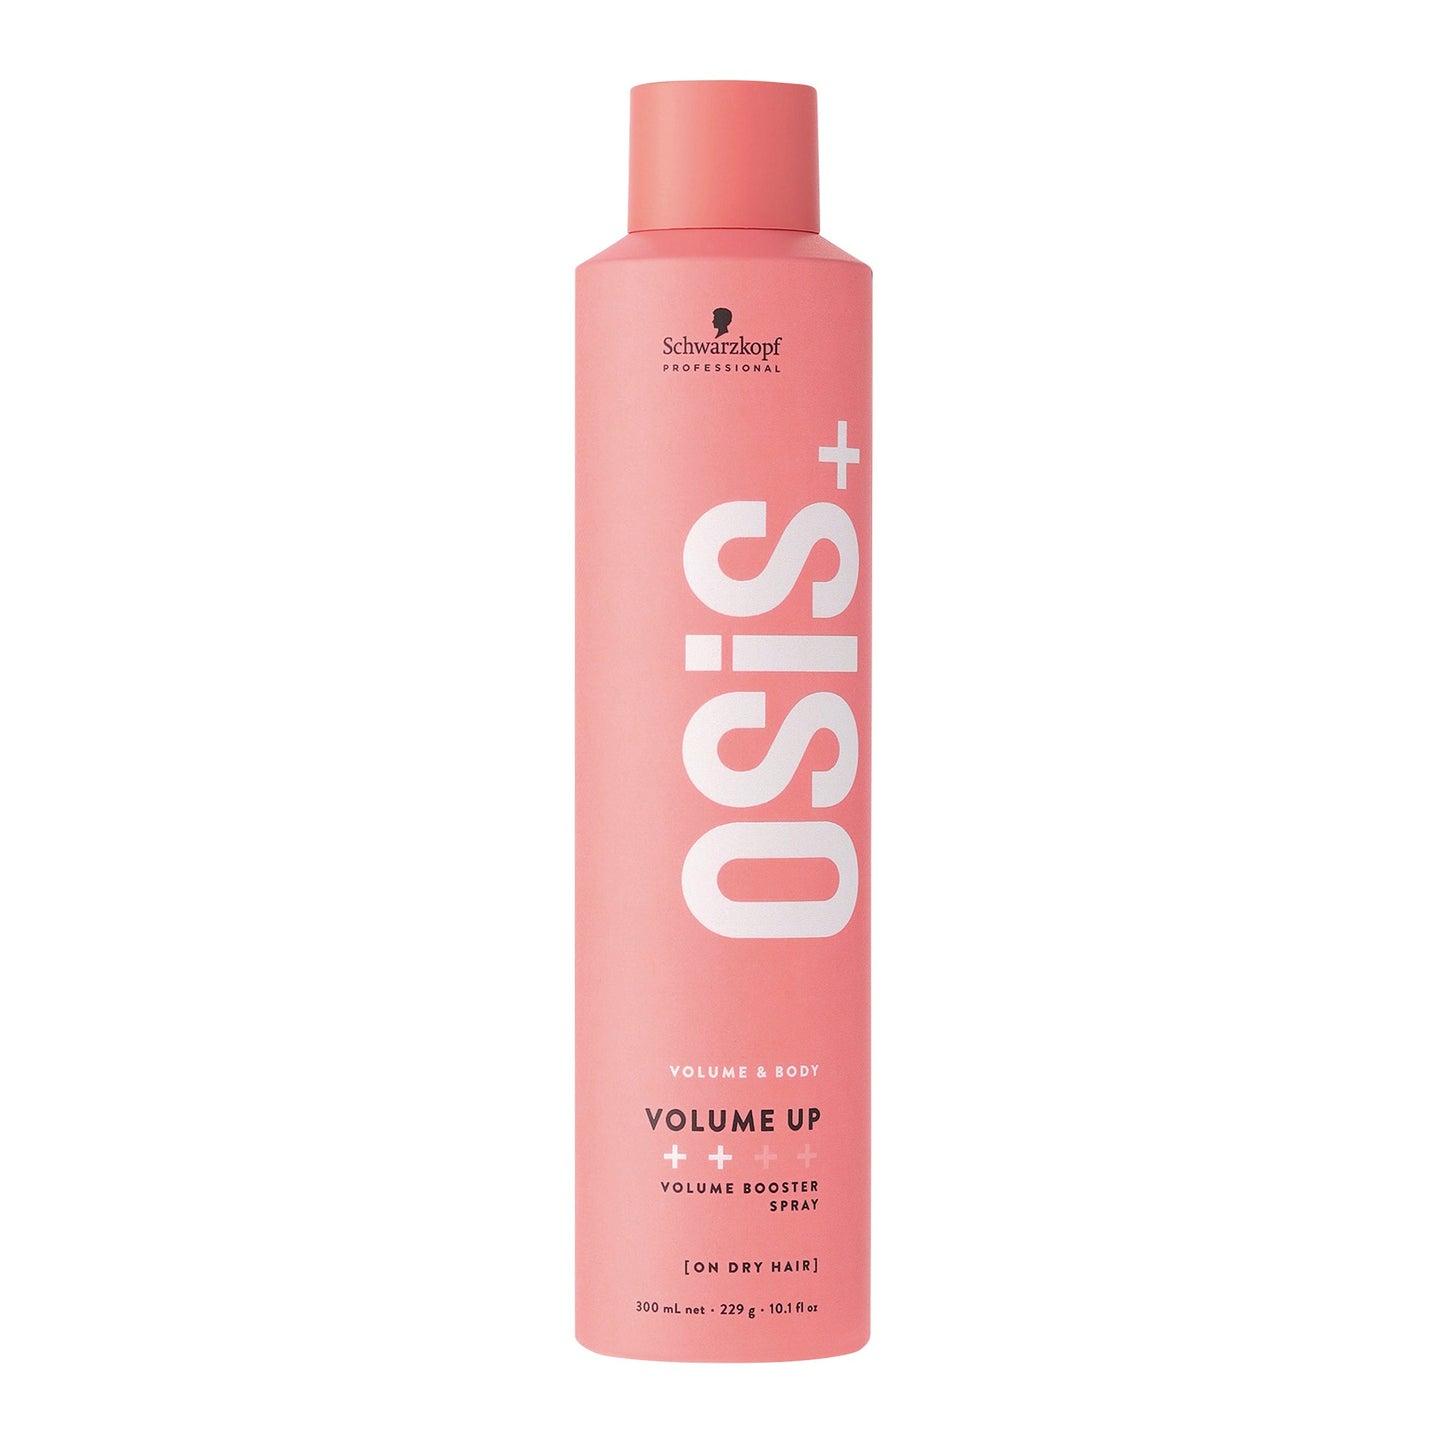 OSiS+ Volume Up, Volume Booster Spray, 300ml